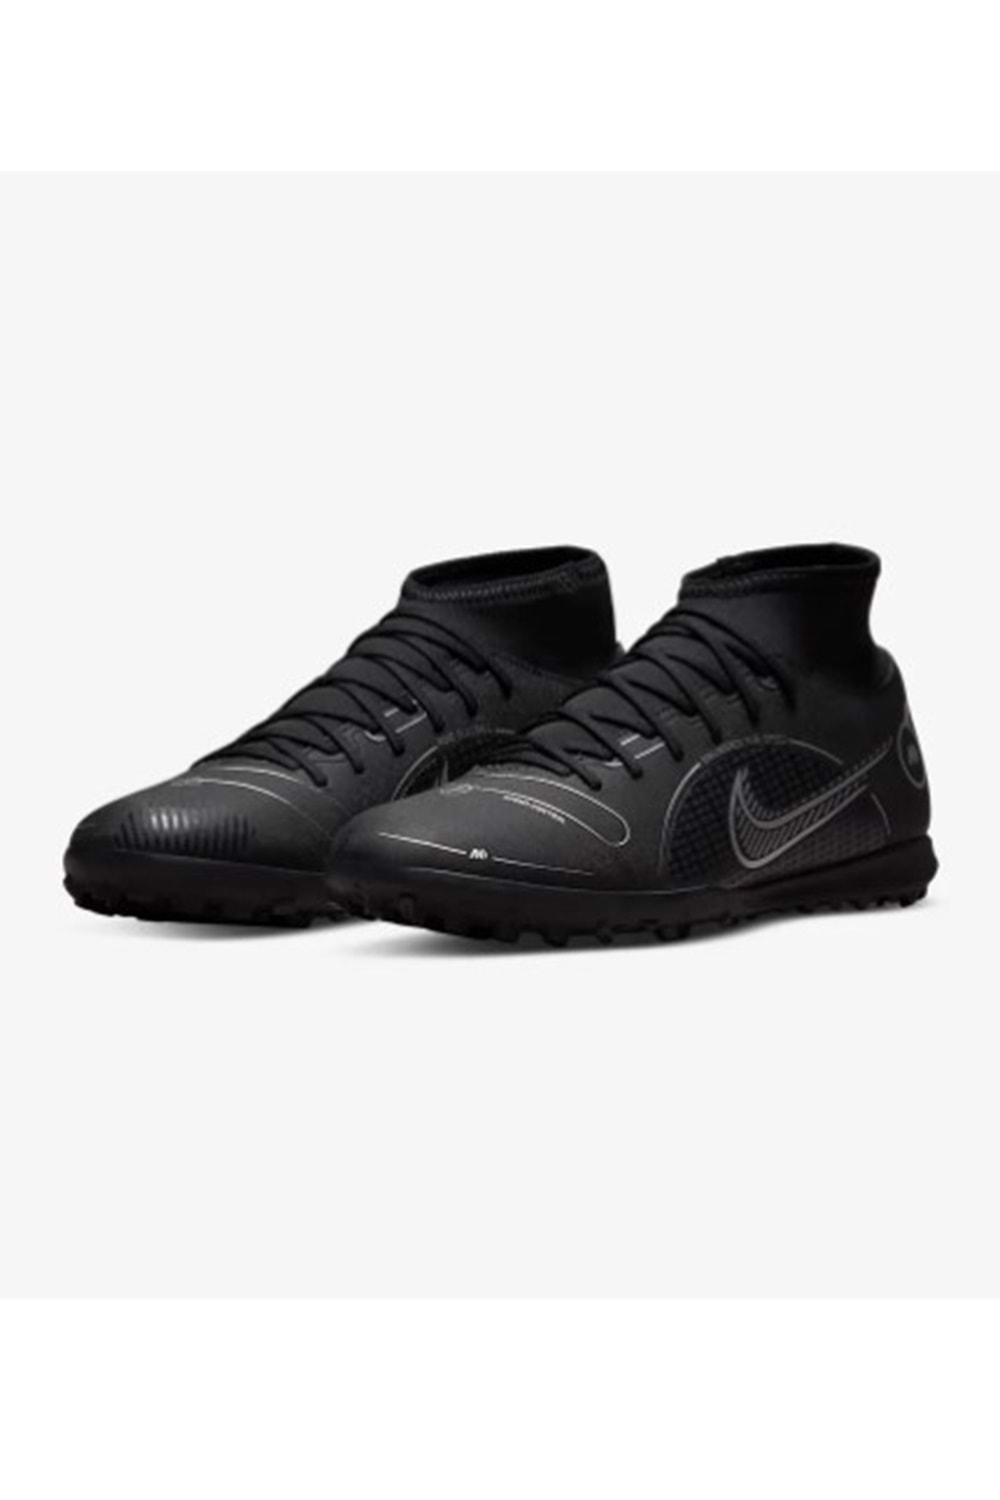 Nike Superfly 8 Club TF Erkek Siyah Halısaha Ayakkabısı DJ2909-007